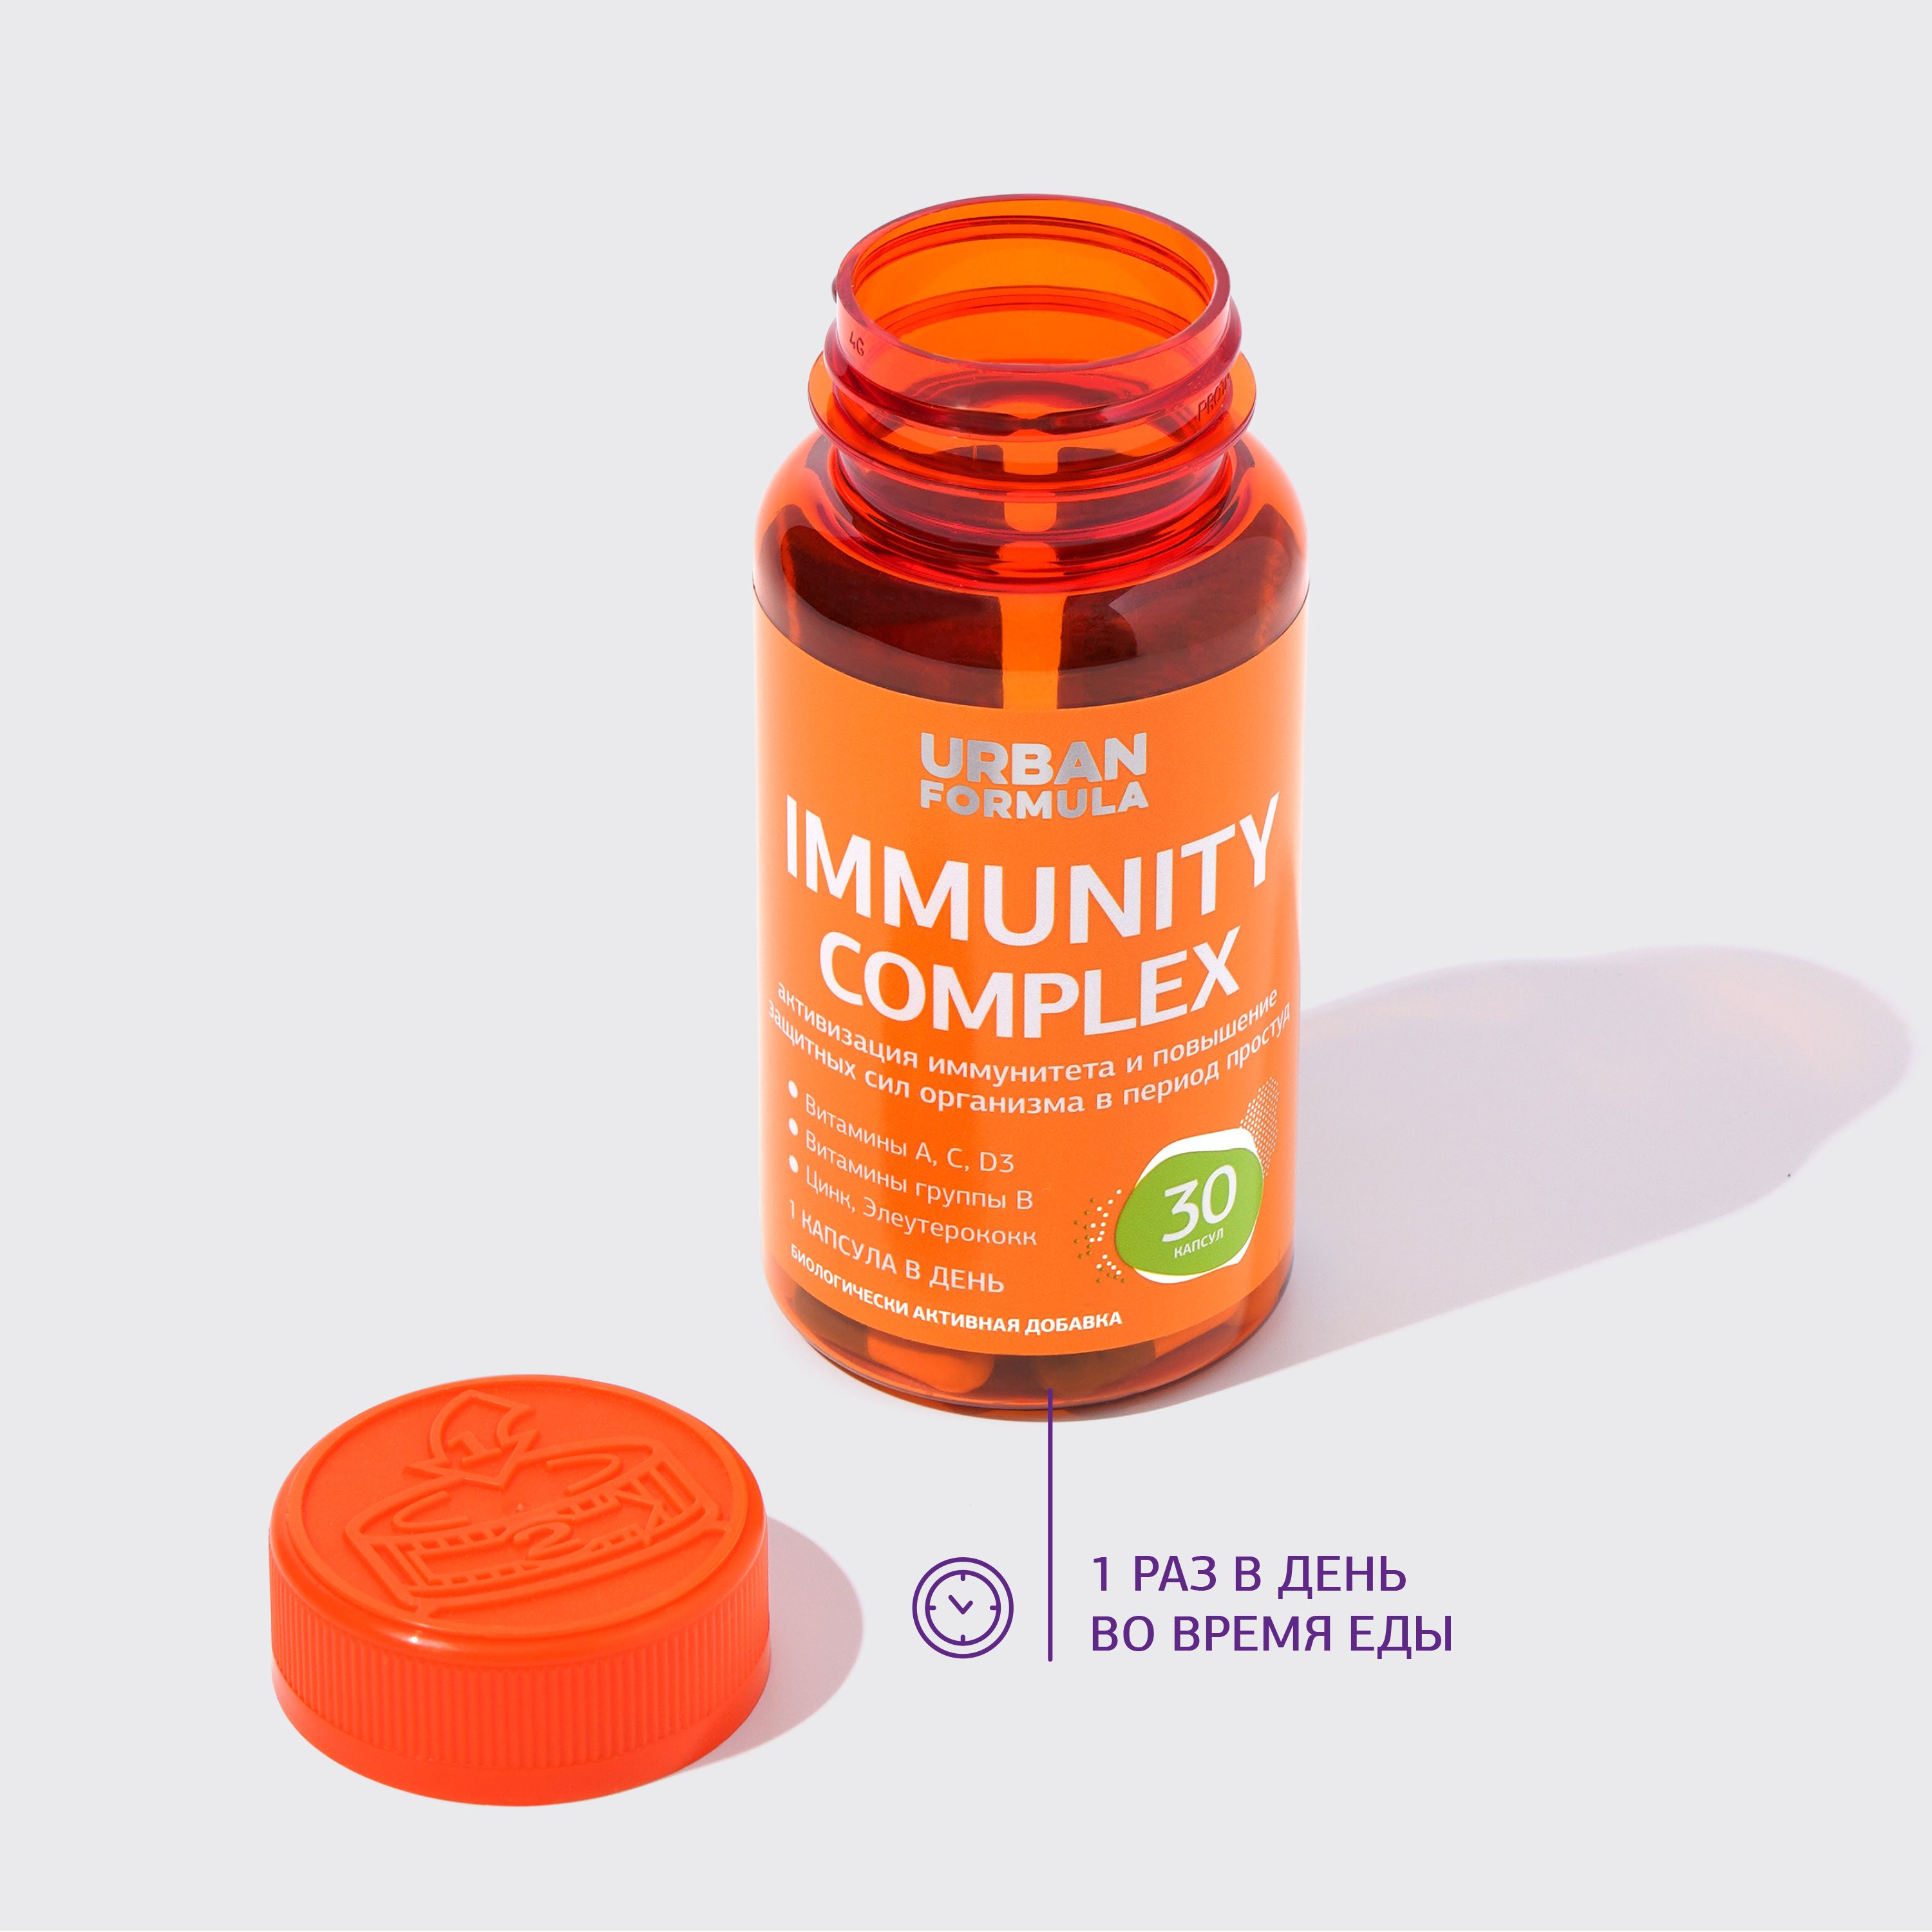 Immunity Complex